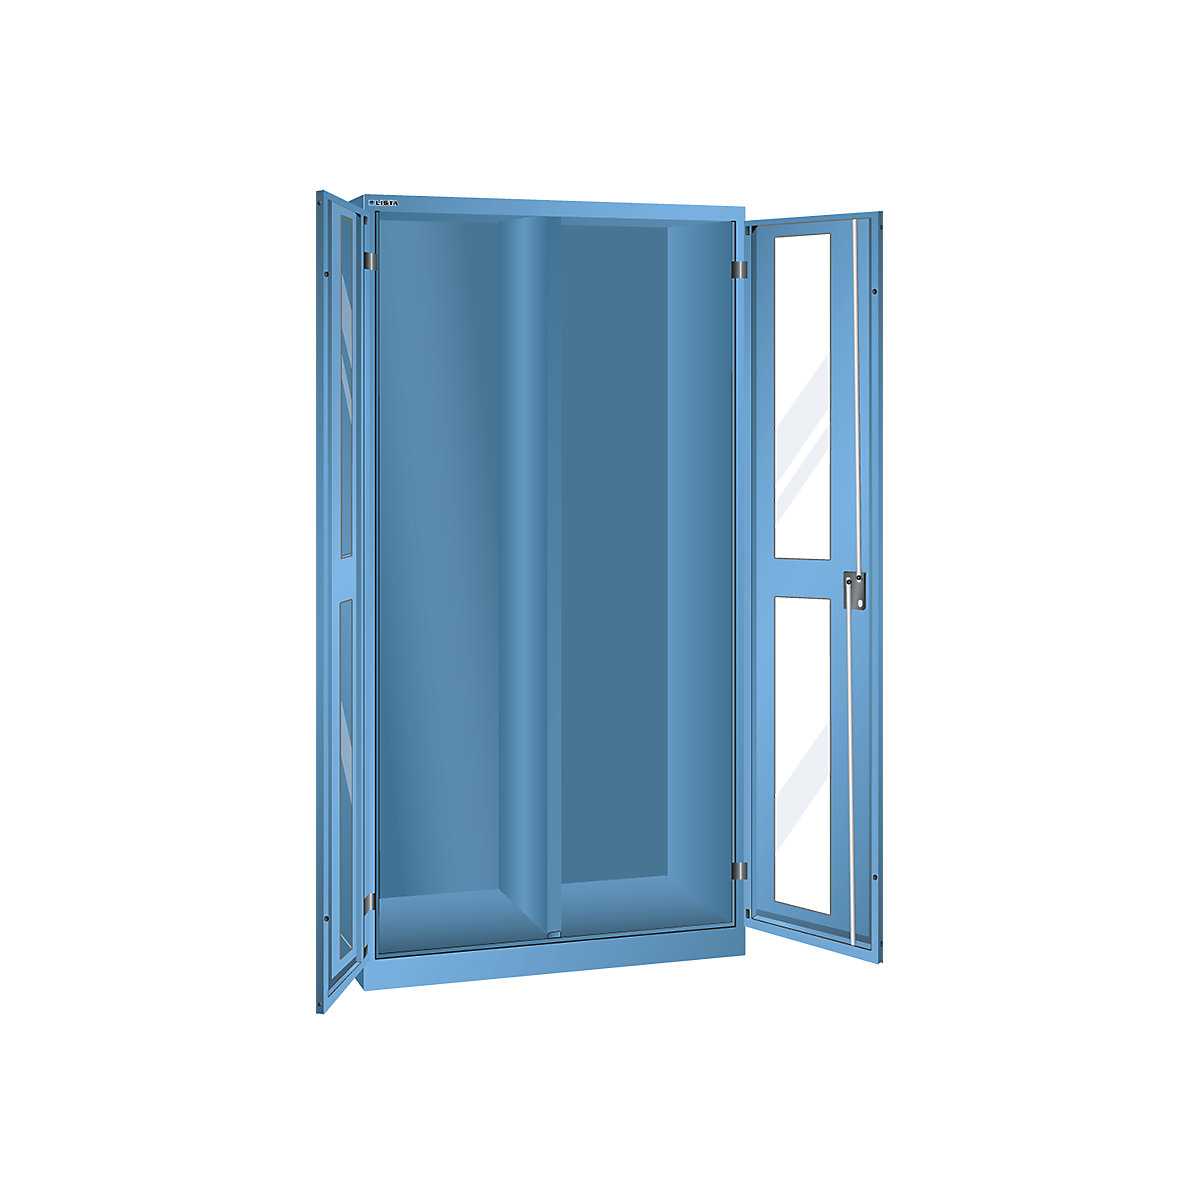 Dulap cu geam transparent, î. x lăţ. x ad. 1950 x 1000 x 580 mm - LISTA